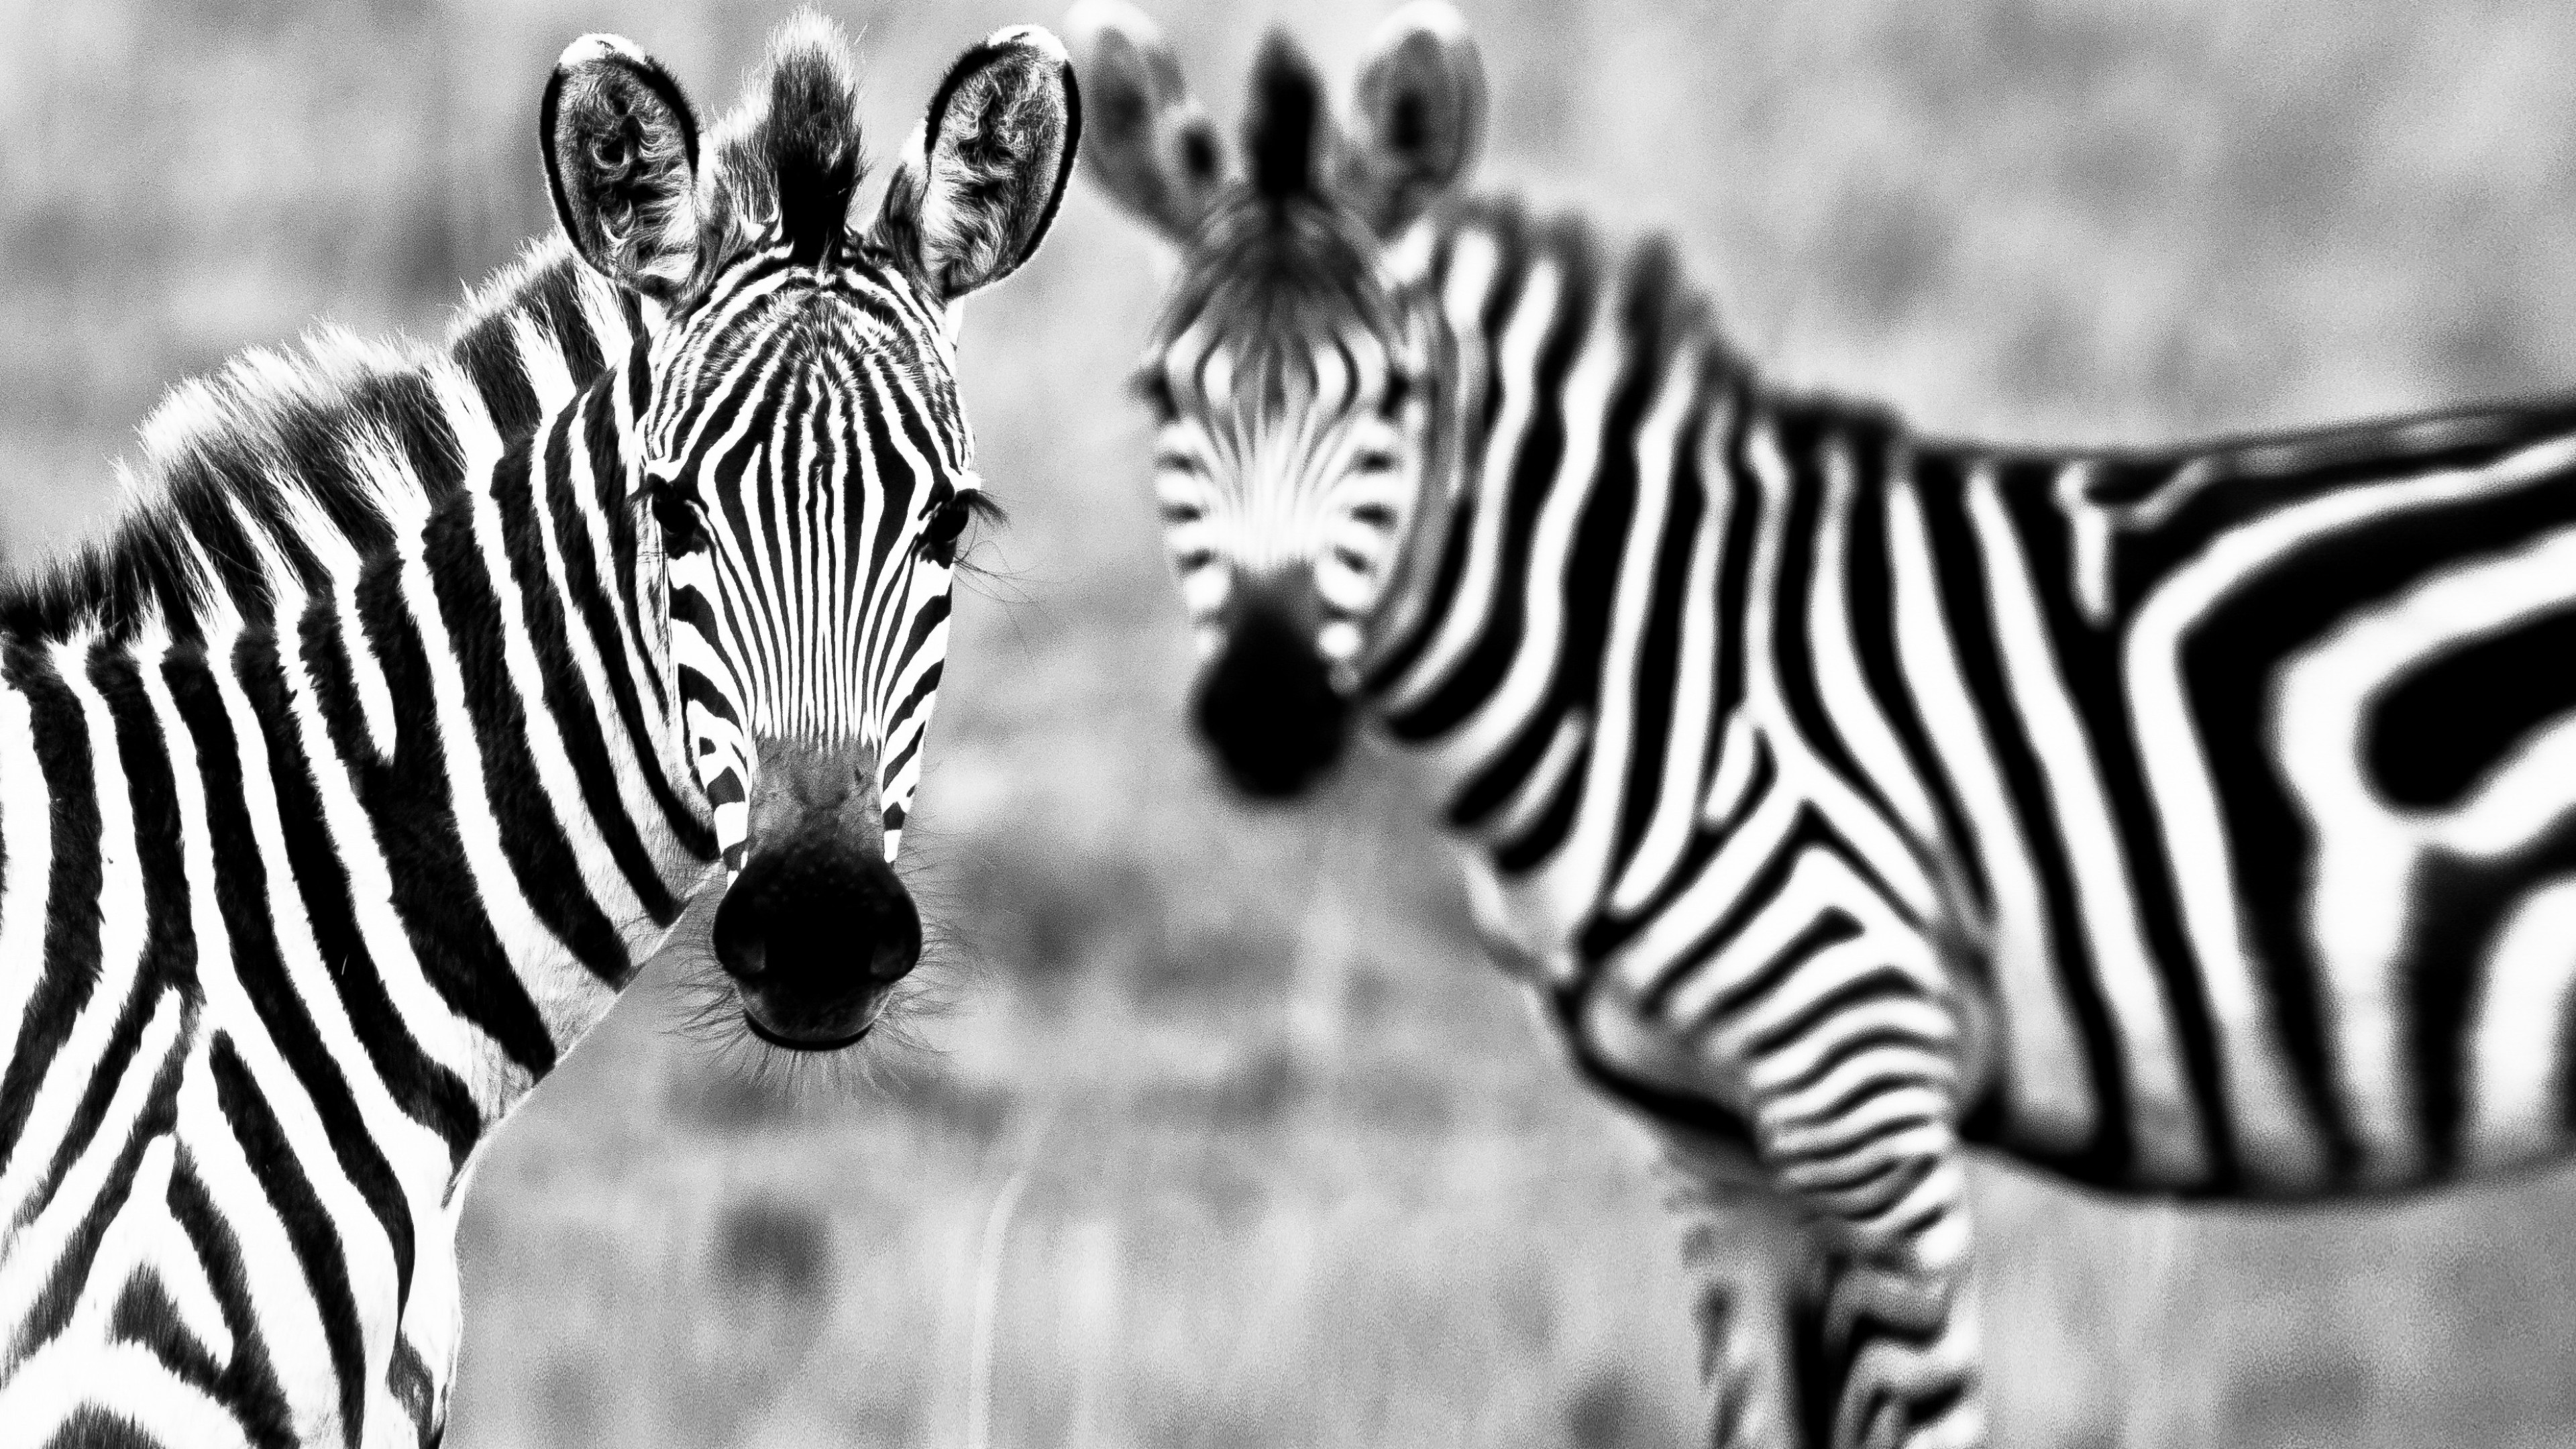  Wallpaper  Zebra Black  White couple cute  animals  